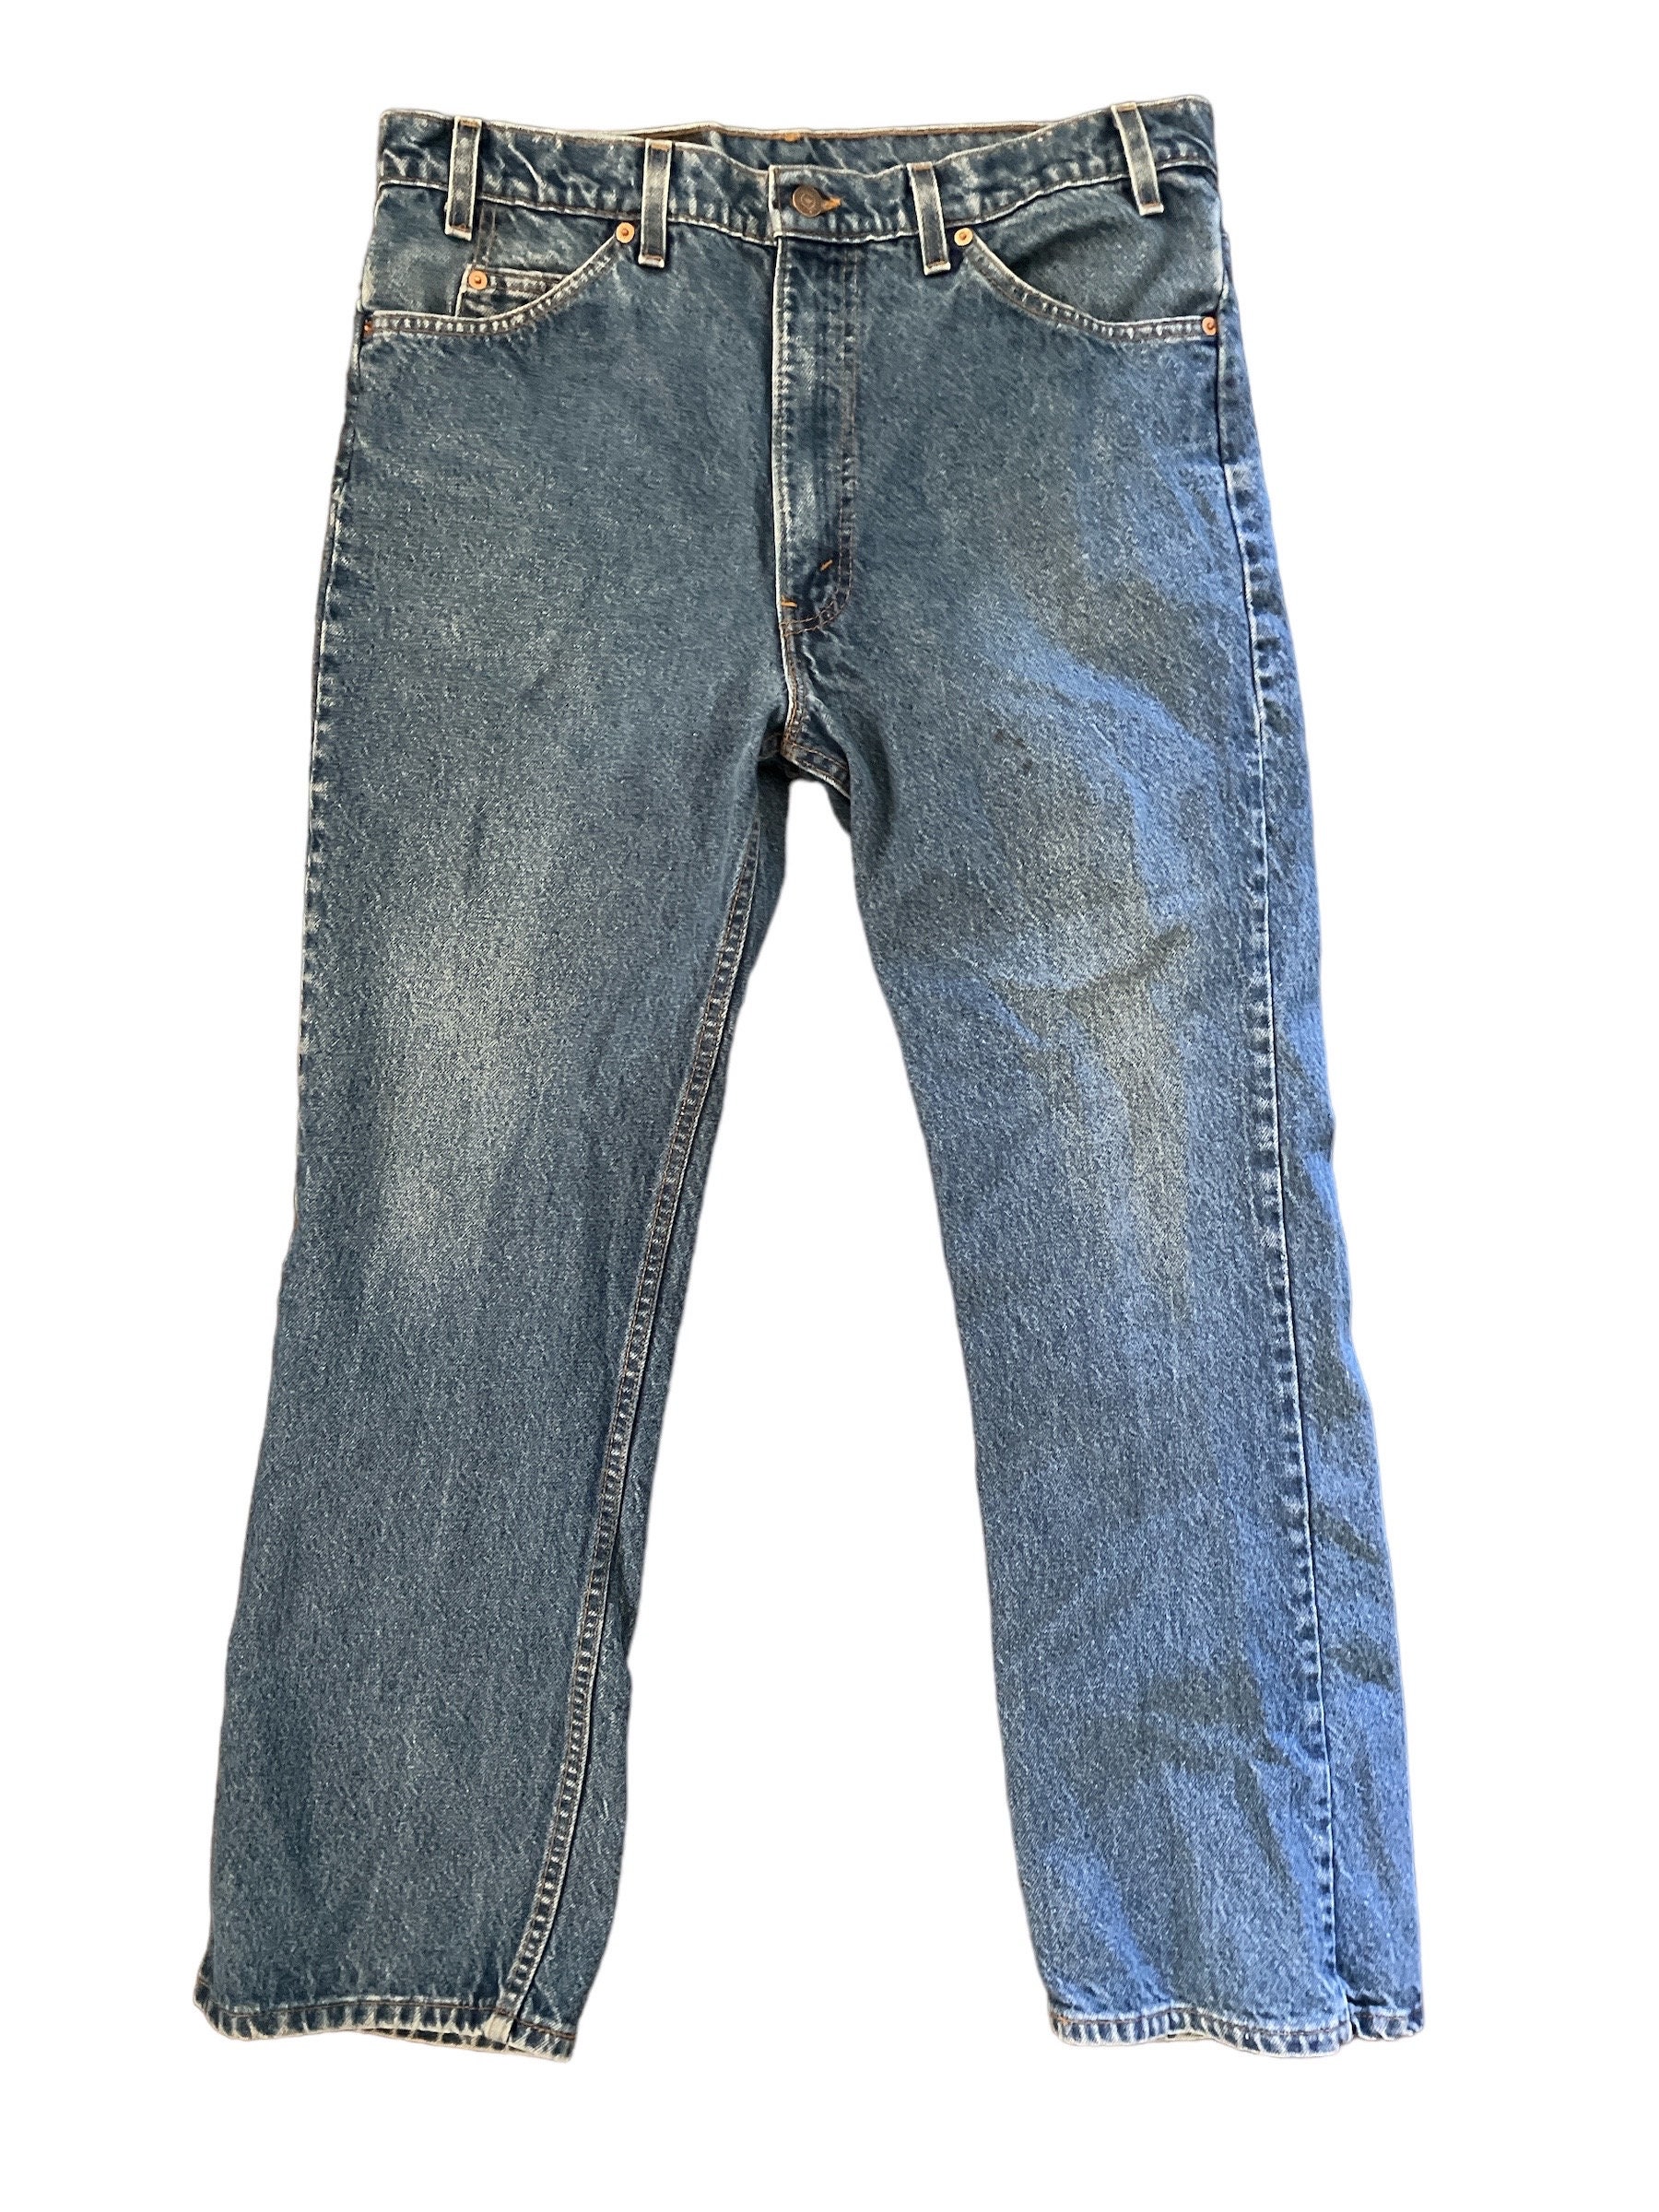 Vintage 70s Levis Orange Tab Jeans Super Soft Denim Sz 36 X 30 Emo Indie  Grunge Light Blue -  Canada